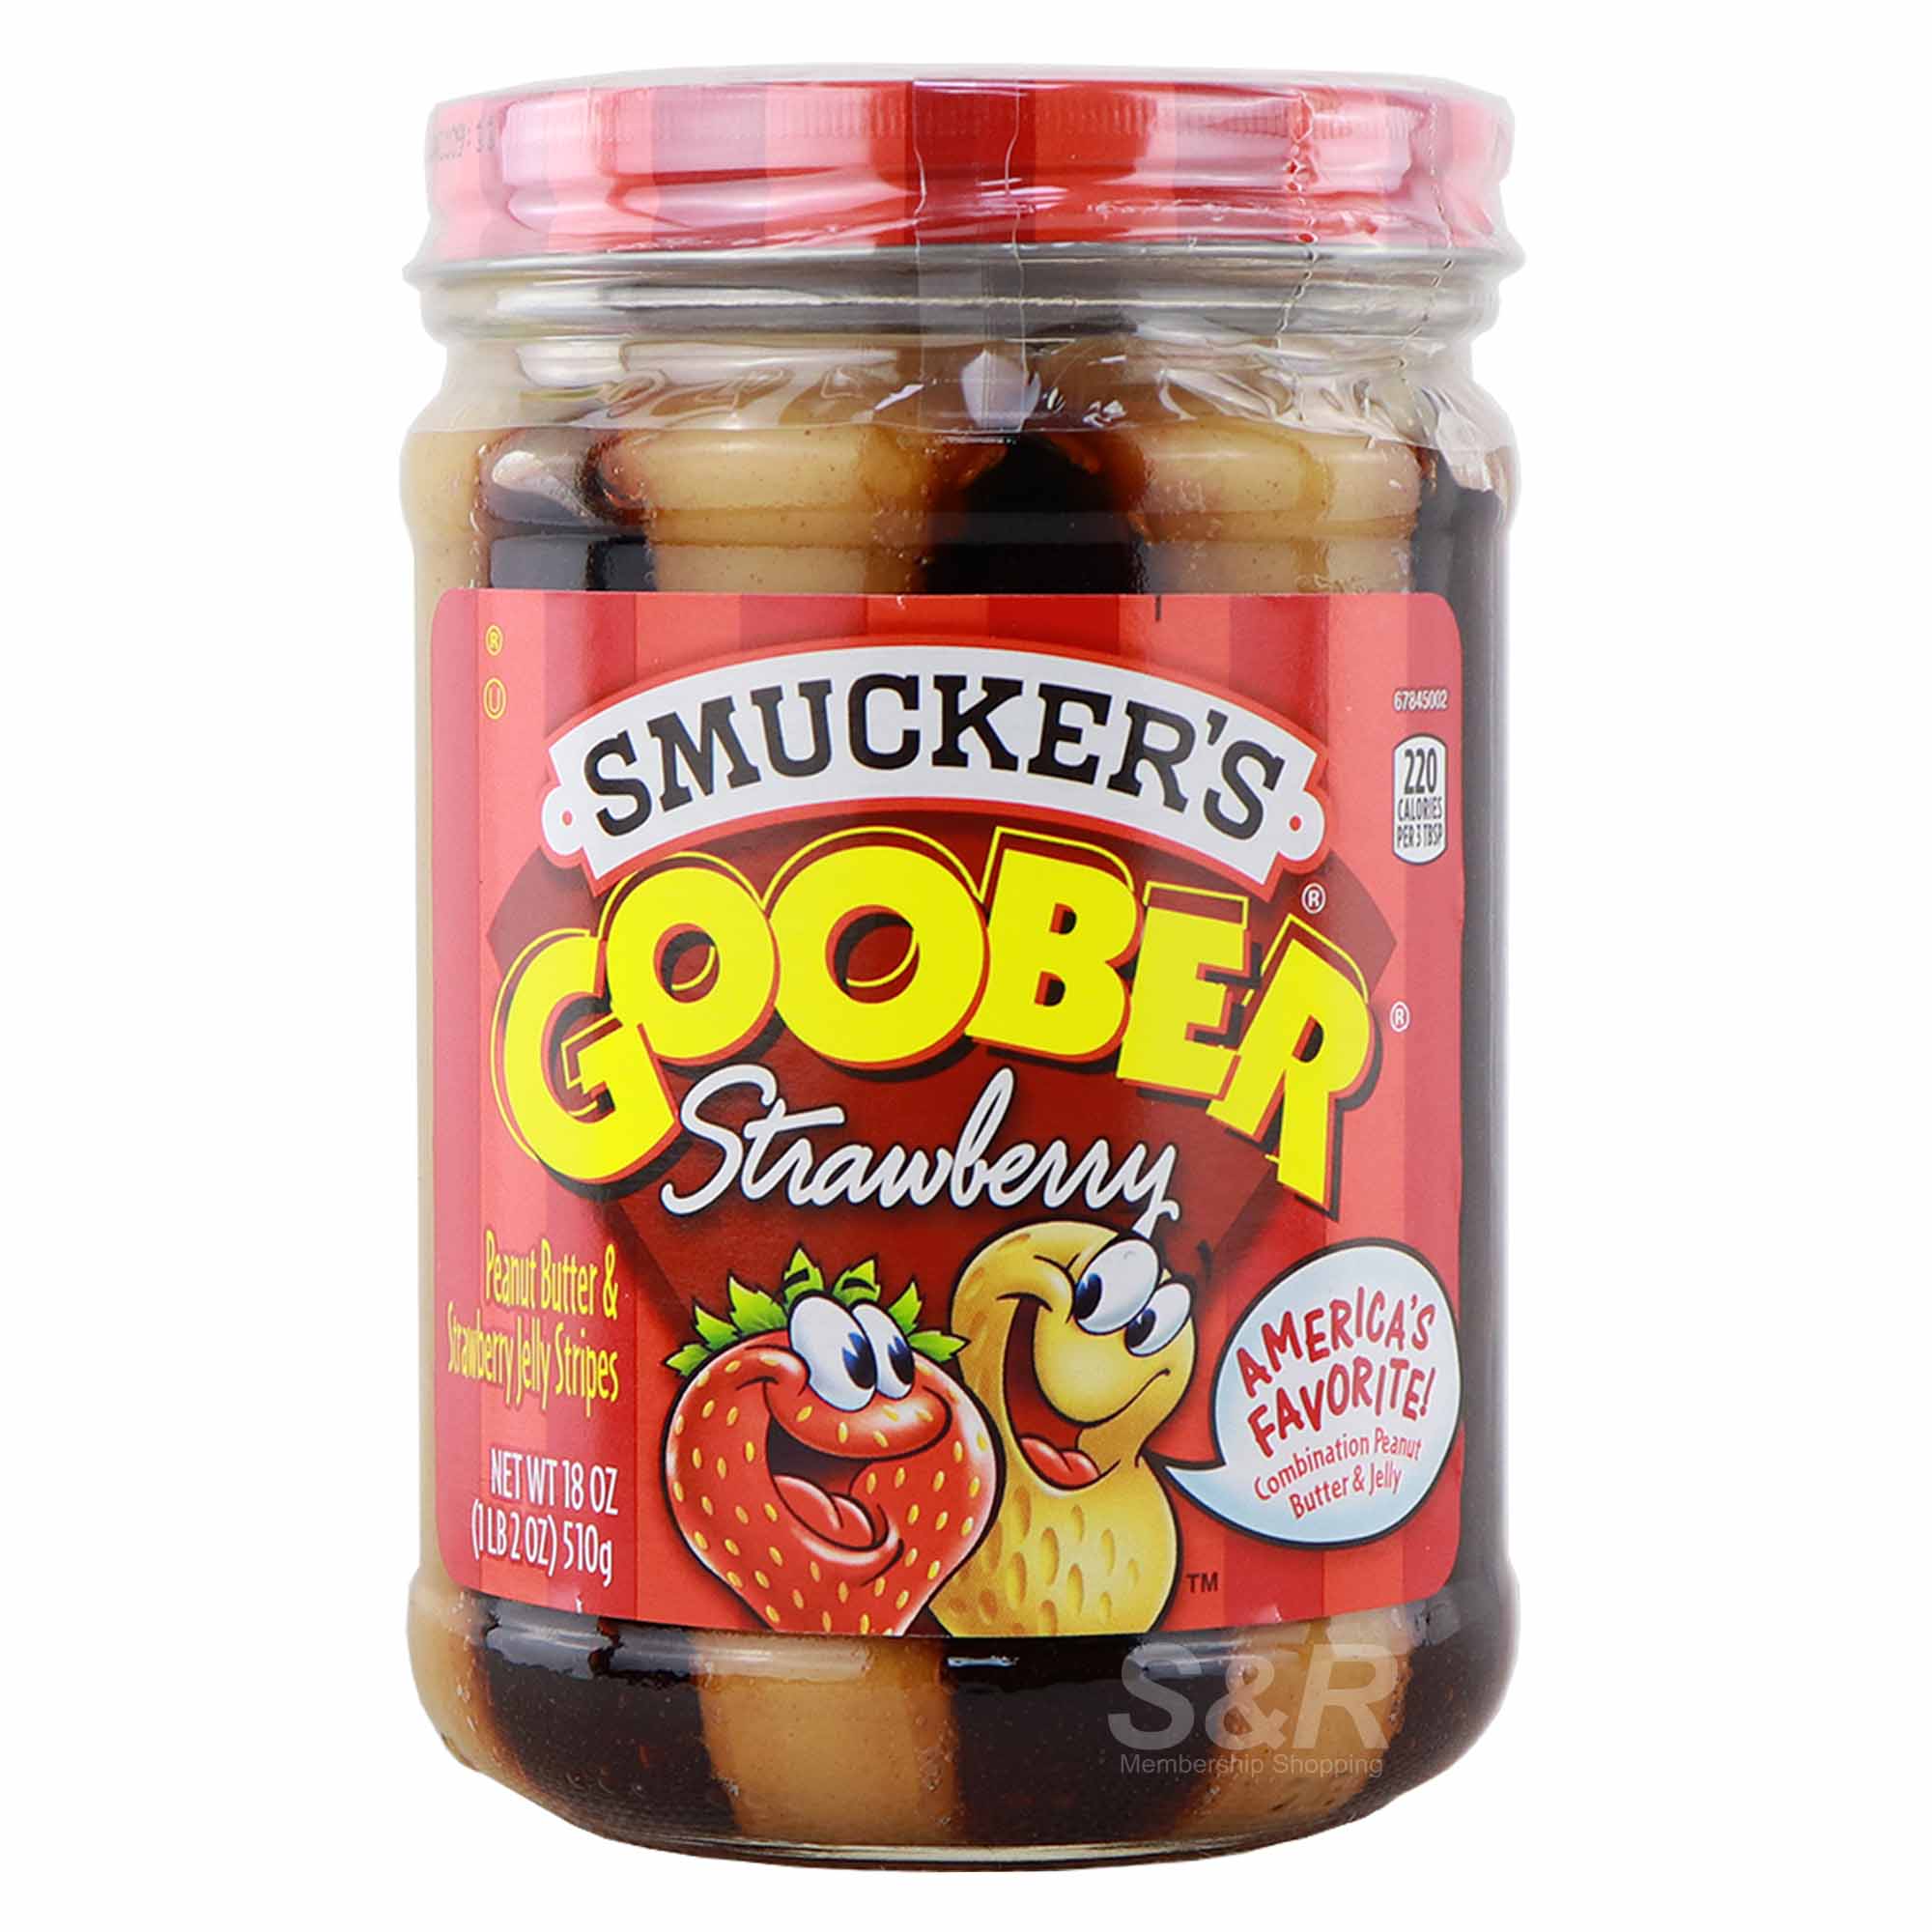 Smucker’s Goober Strawberry Peanut Butter 510g